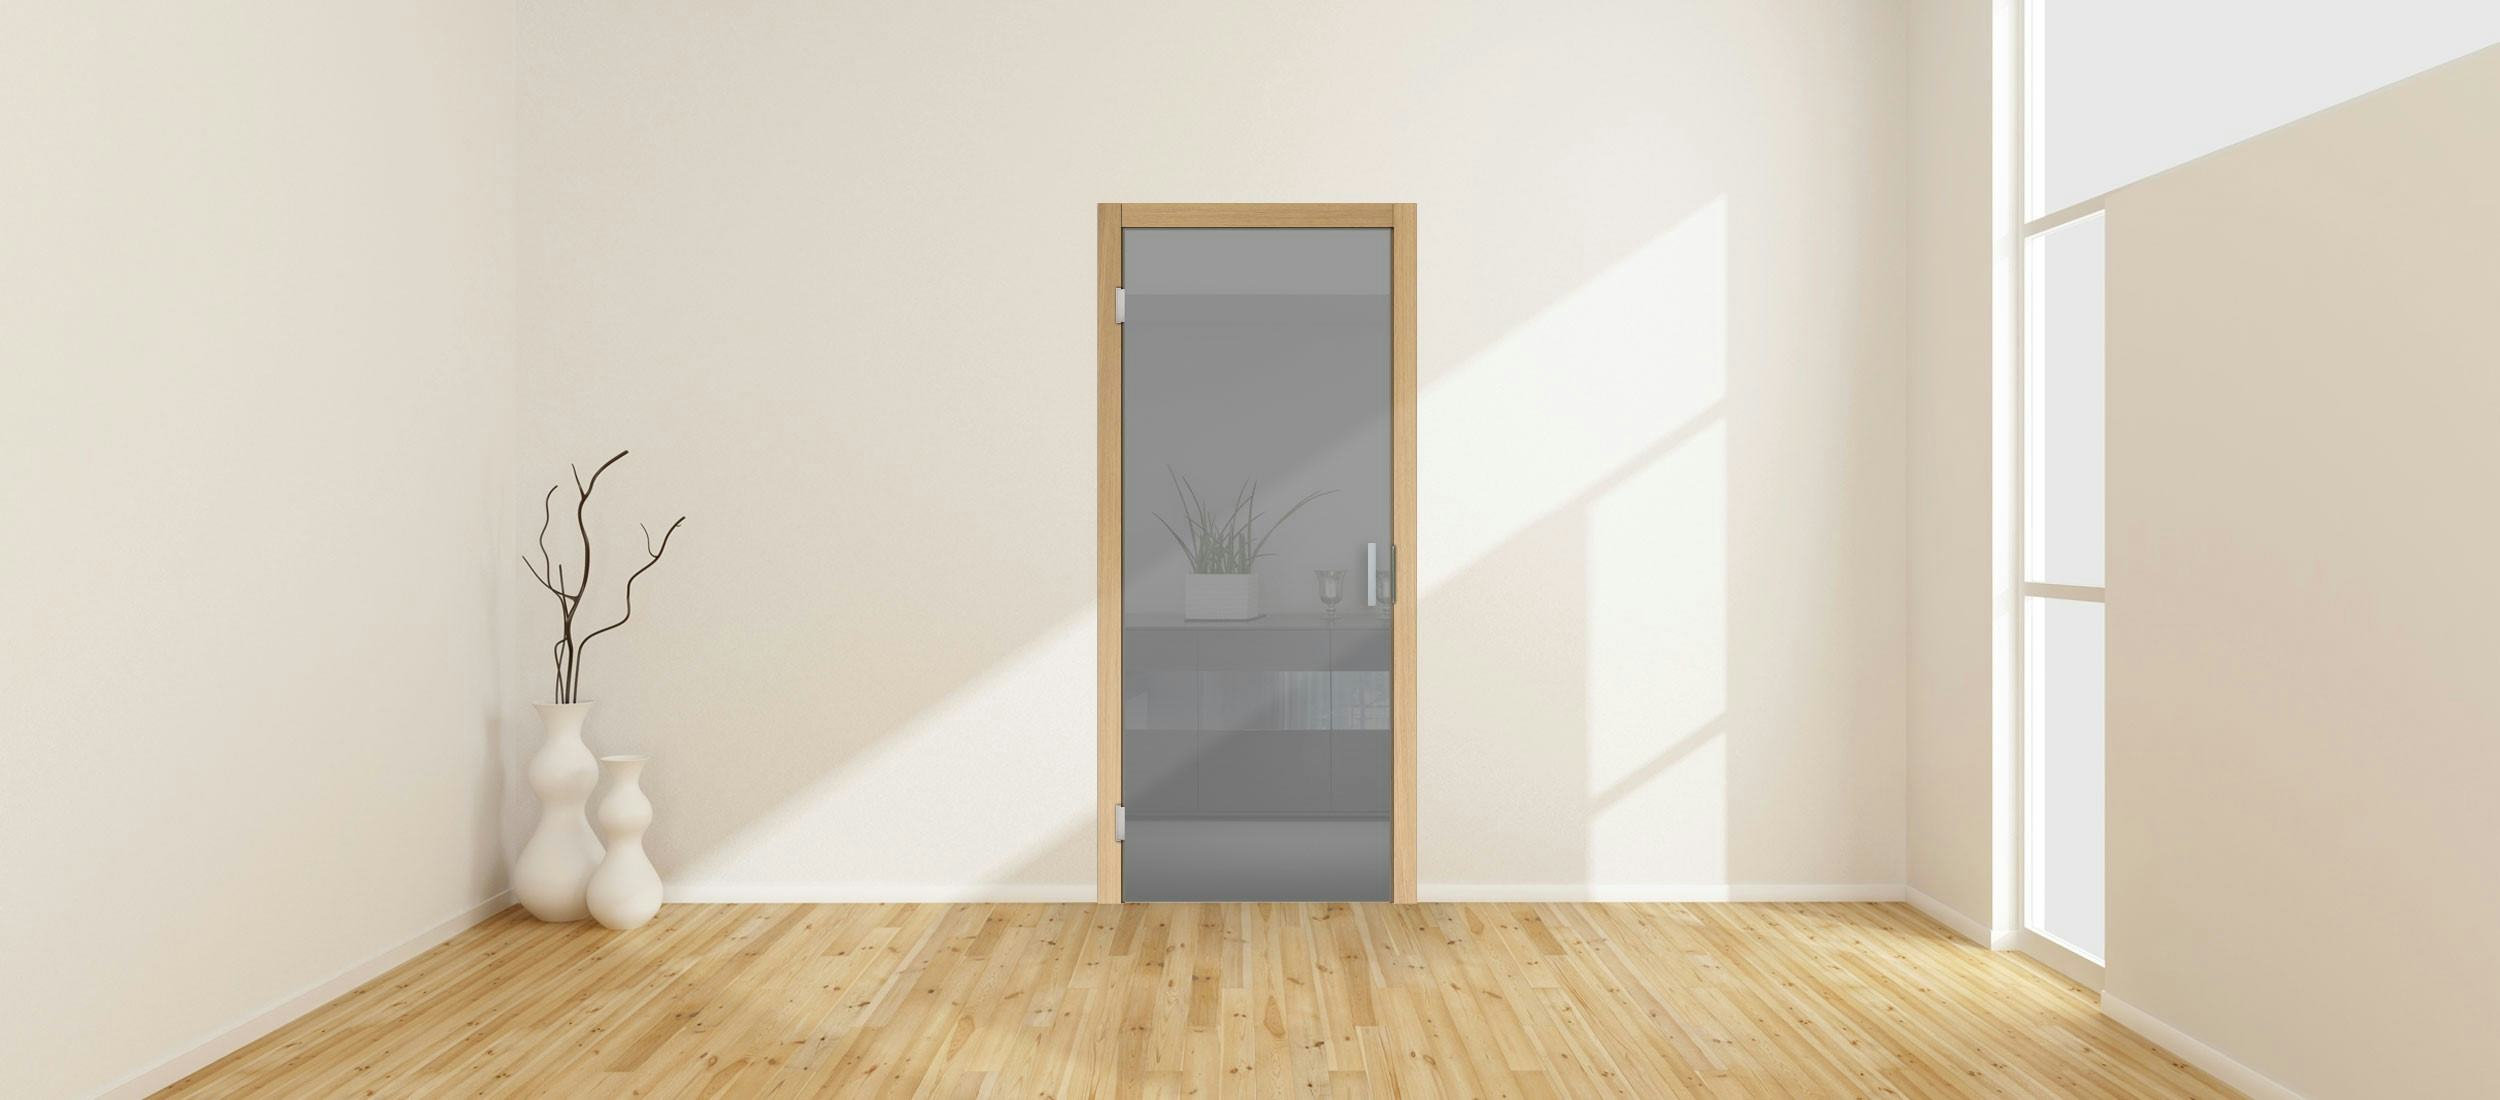 Fully glazed glass internal door